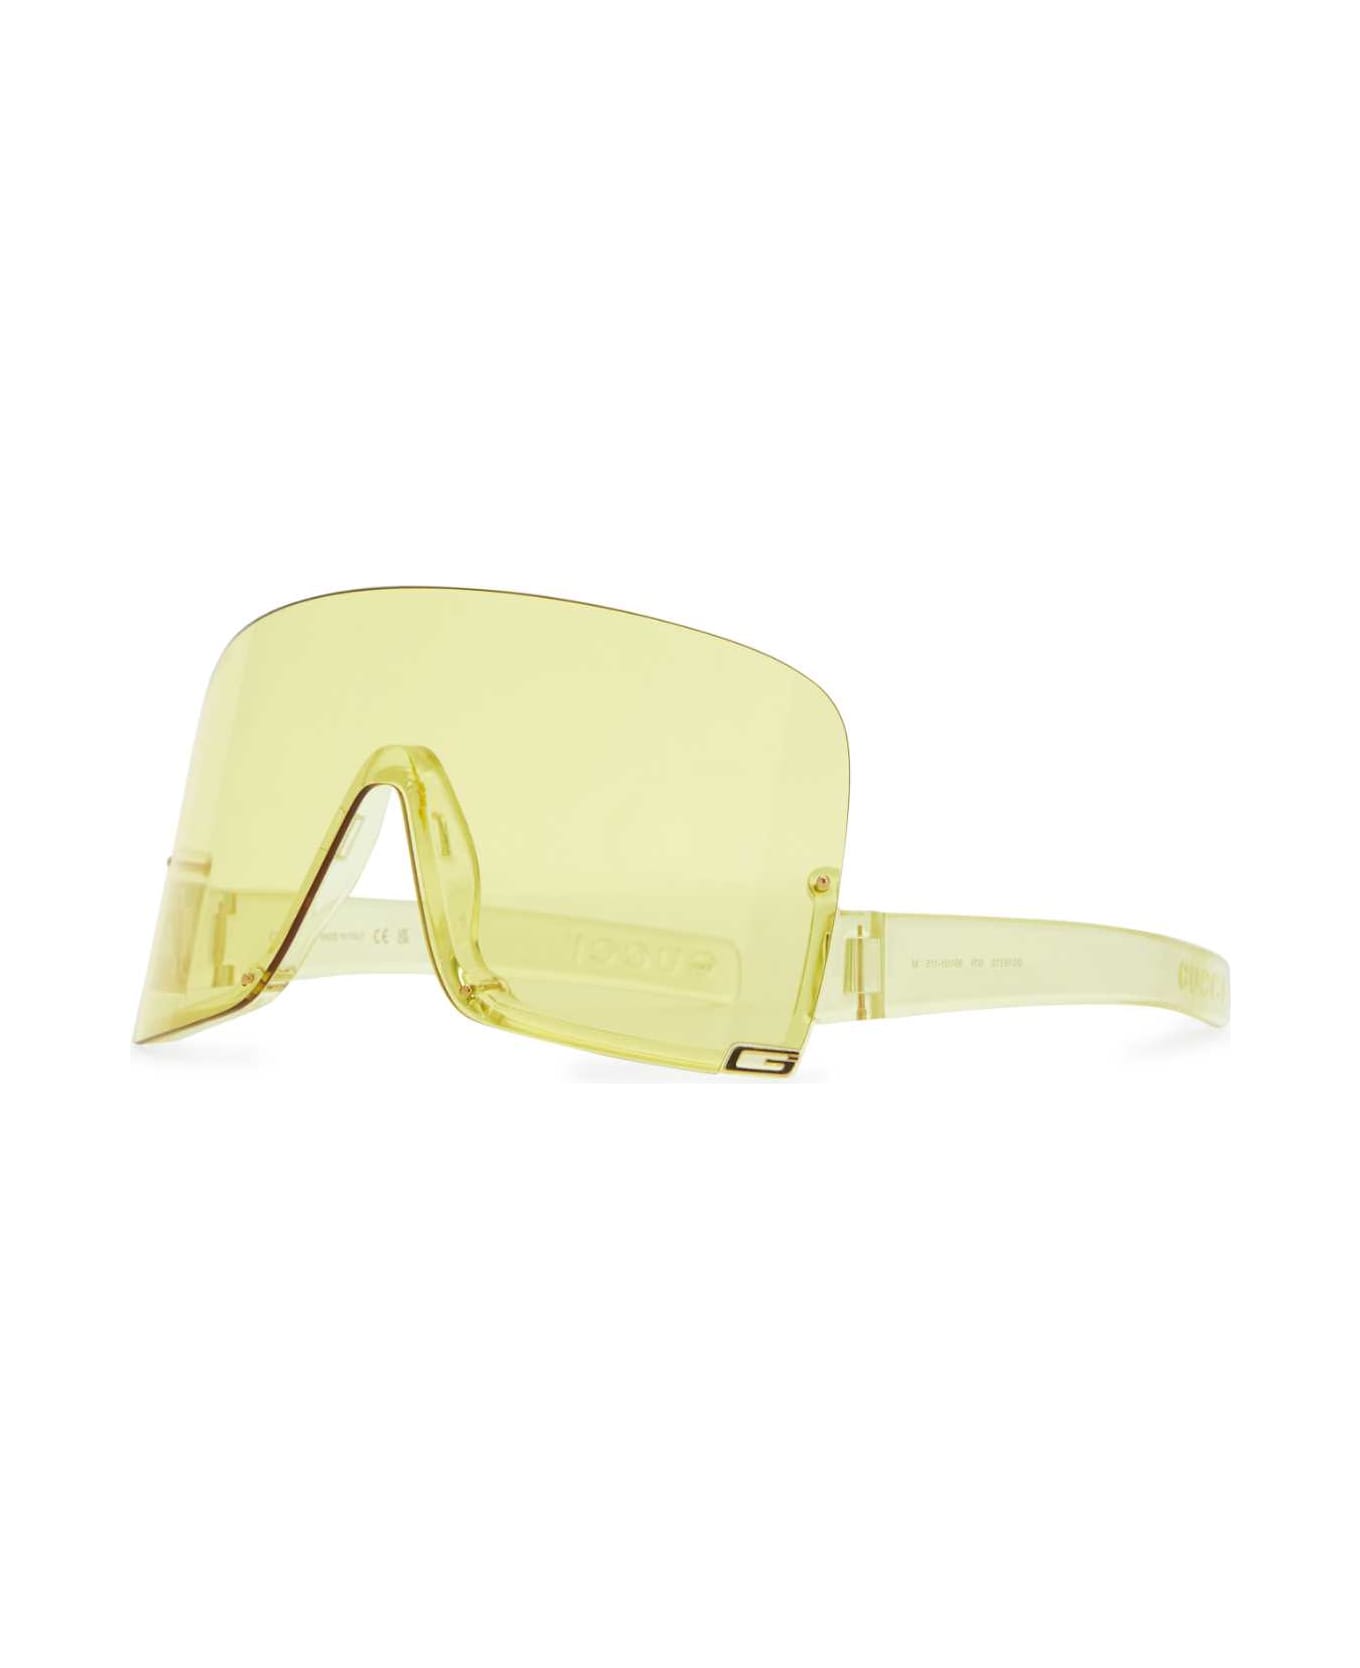 Gucci Yellow Acetate Sunglasses - 7474 サングラス